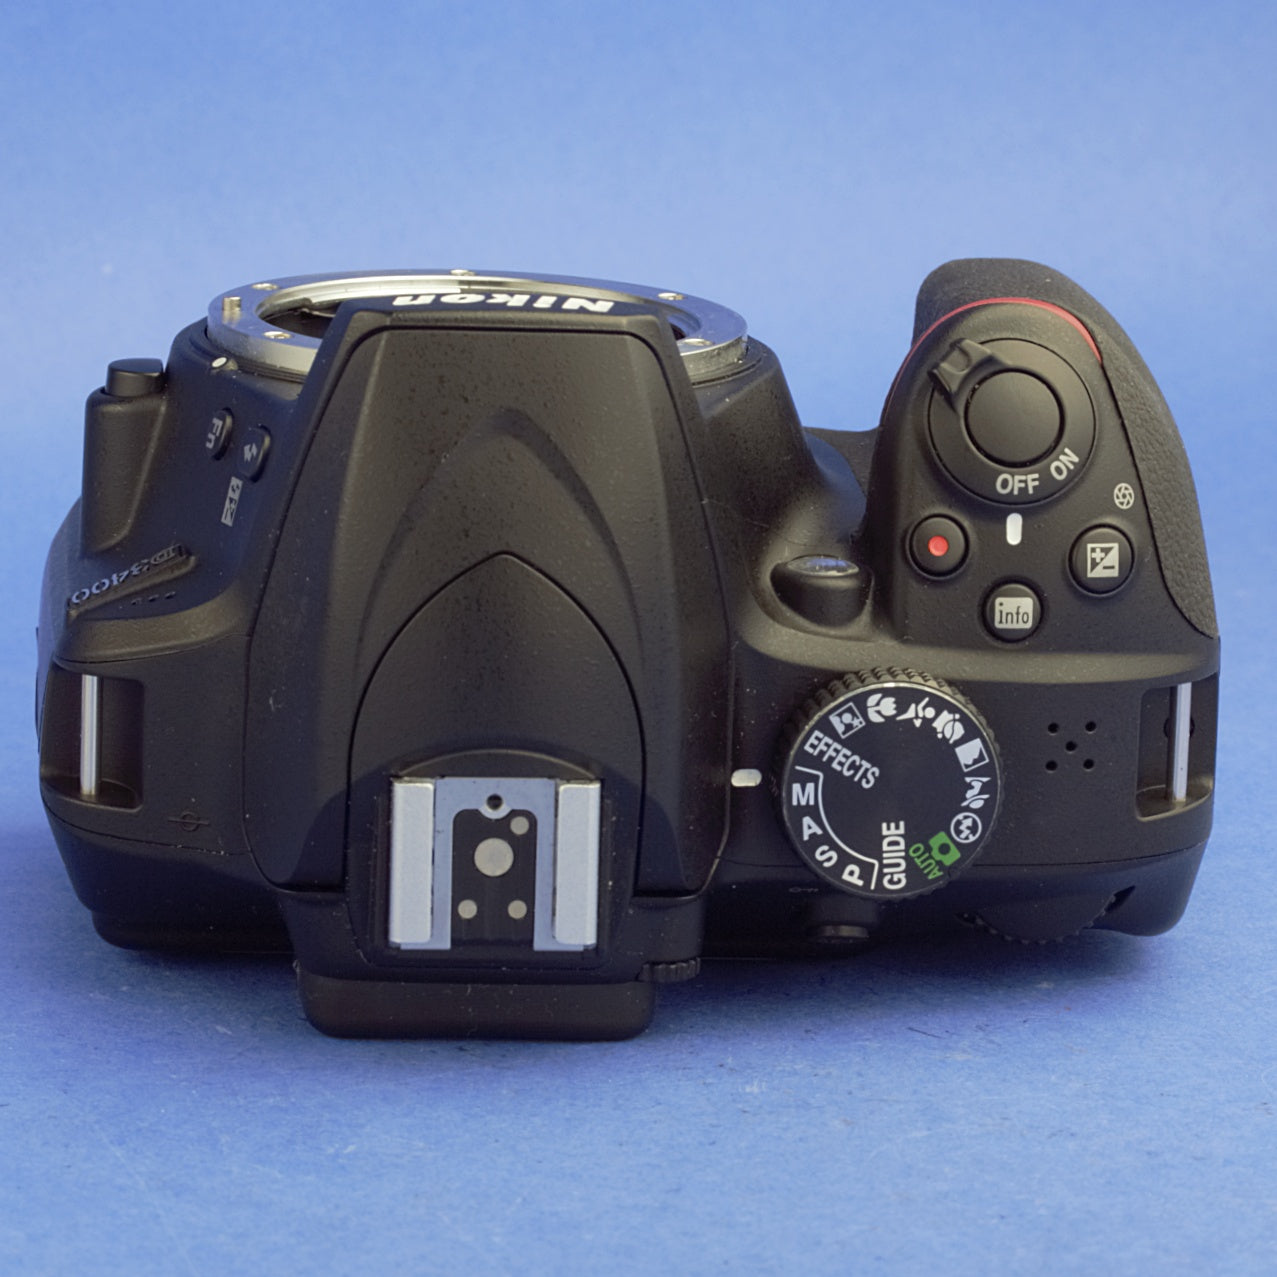 Nikon D3400 Digital Camera Body 12000 Actuations Near Mint Condition